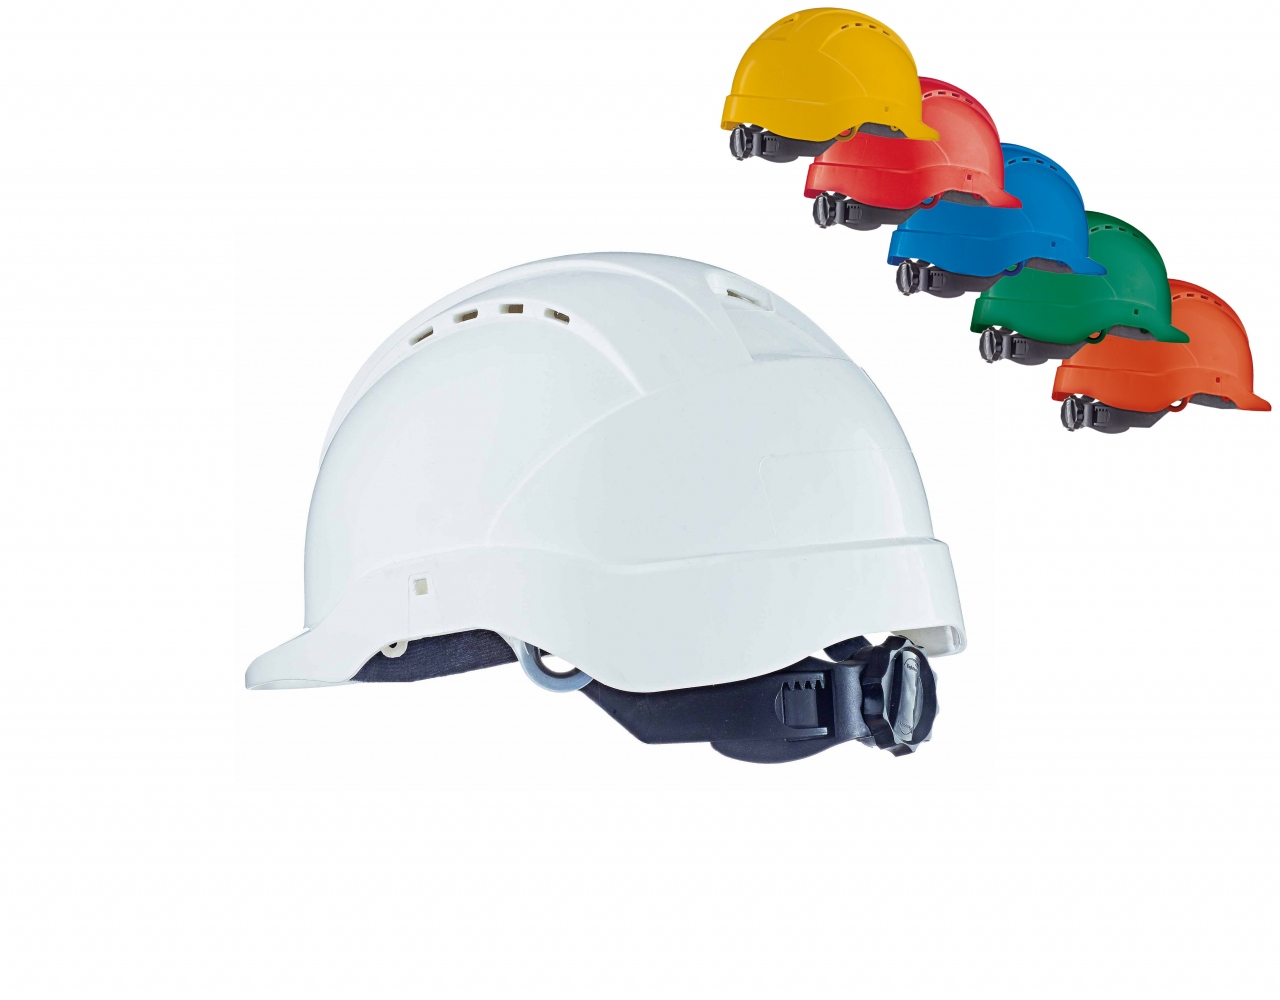 pics/Feldtmann 2016/Kopfschutz/helmets/tector-4003-industrial-safety-helmet-en-397-white-yellow-red-green-blue-orange2.jpg